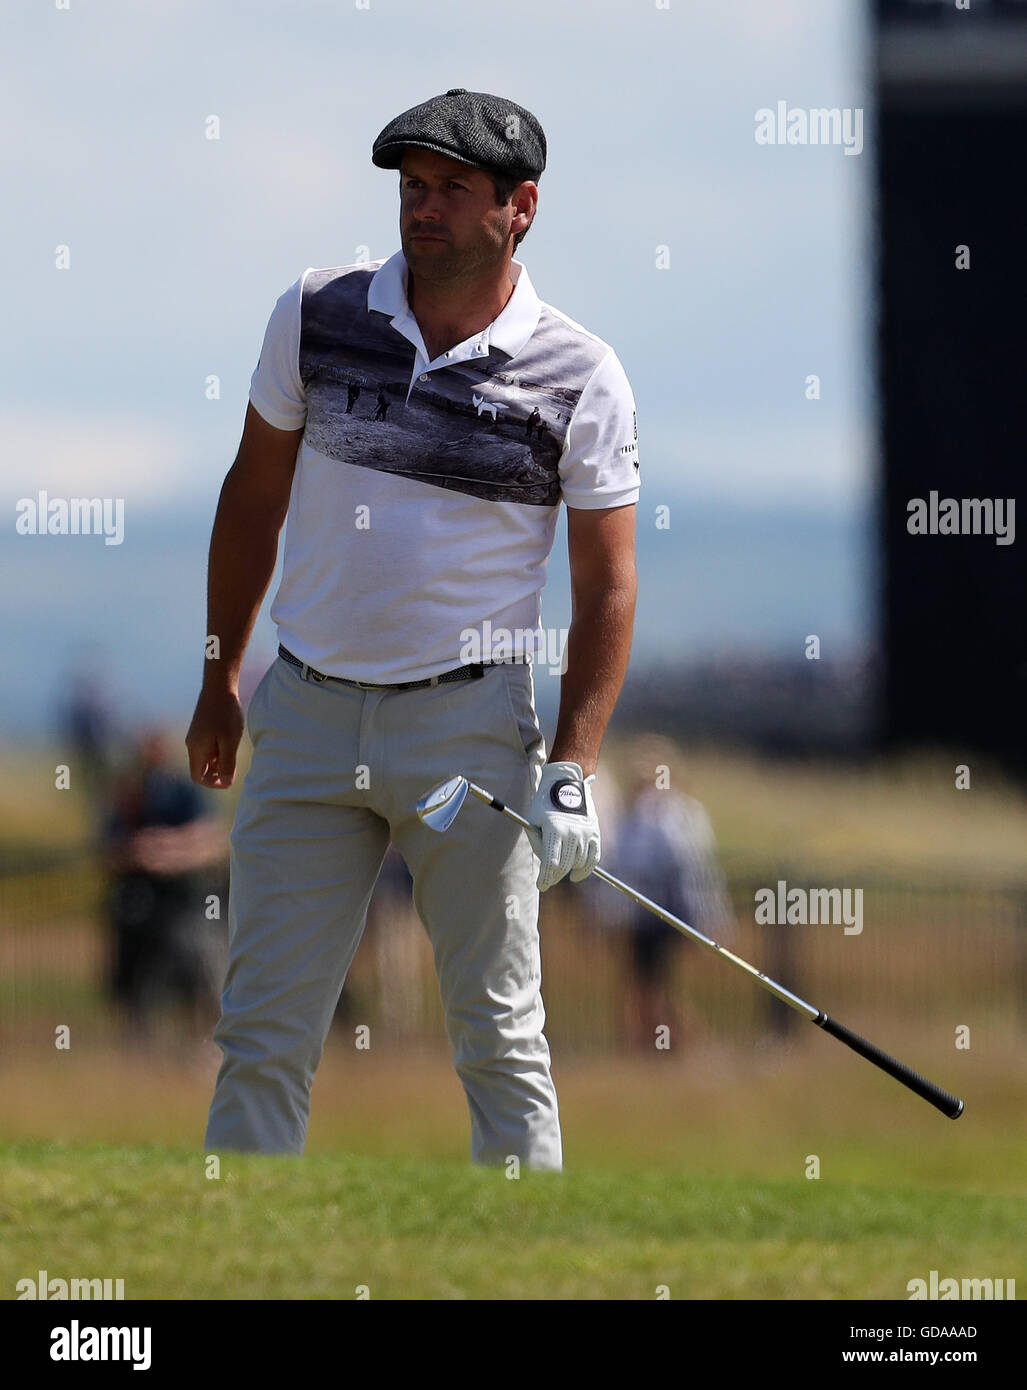 Englands Robert Rock während eines der The Open Championship 2016 im Royal Troon Golf Club, South Ayrshire. Stockfoto